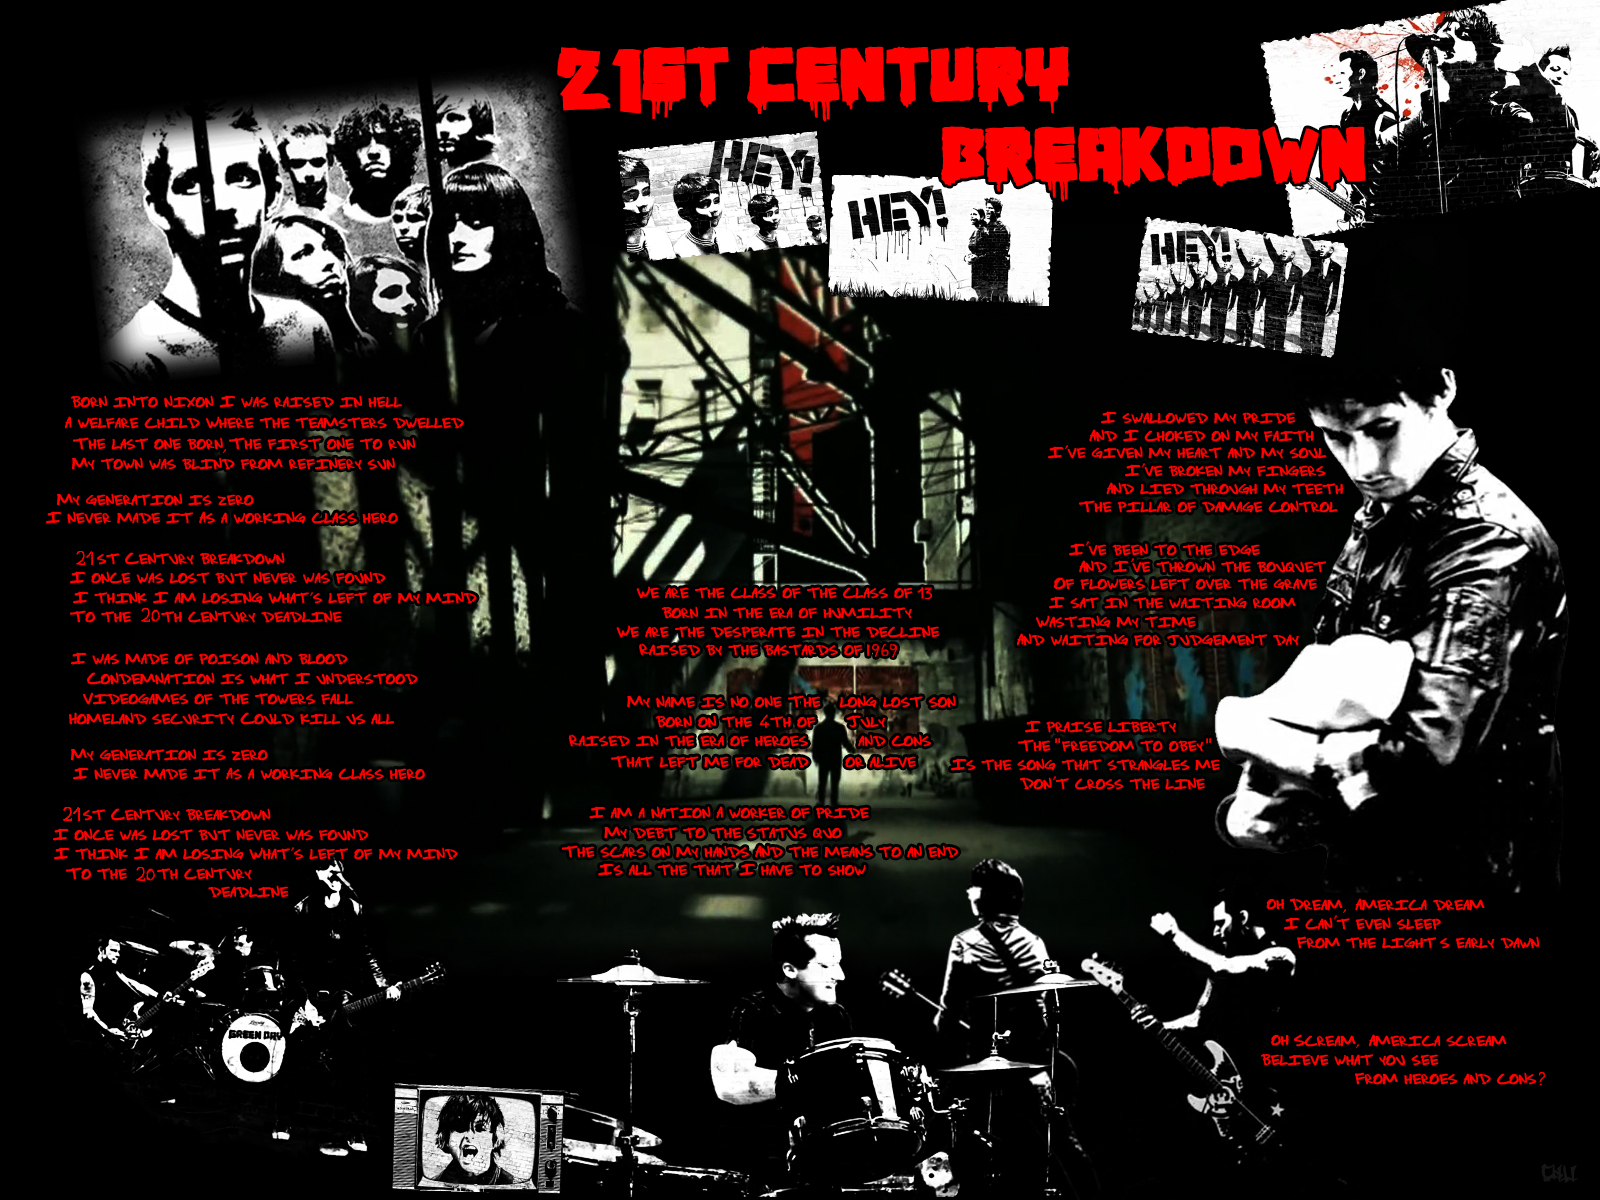 Green Day 21st Century Breakdown Wallpaper